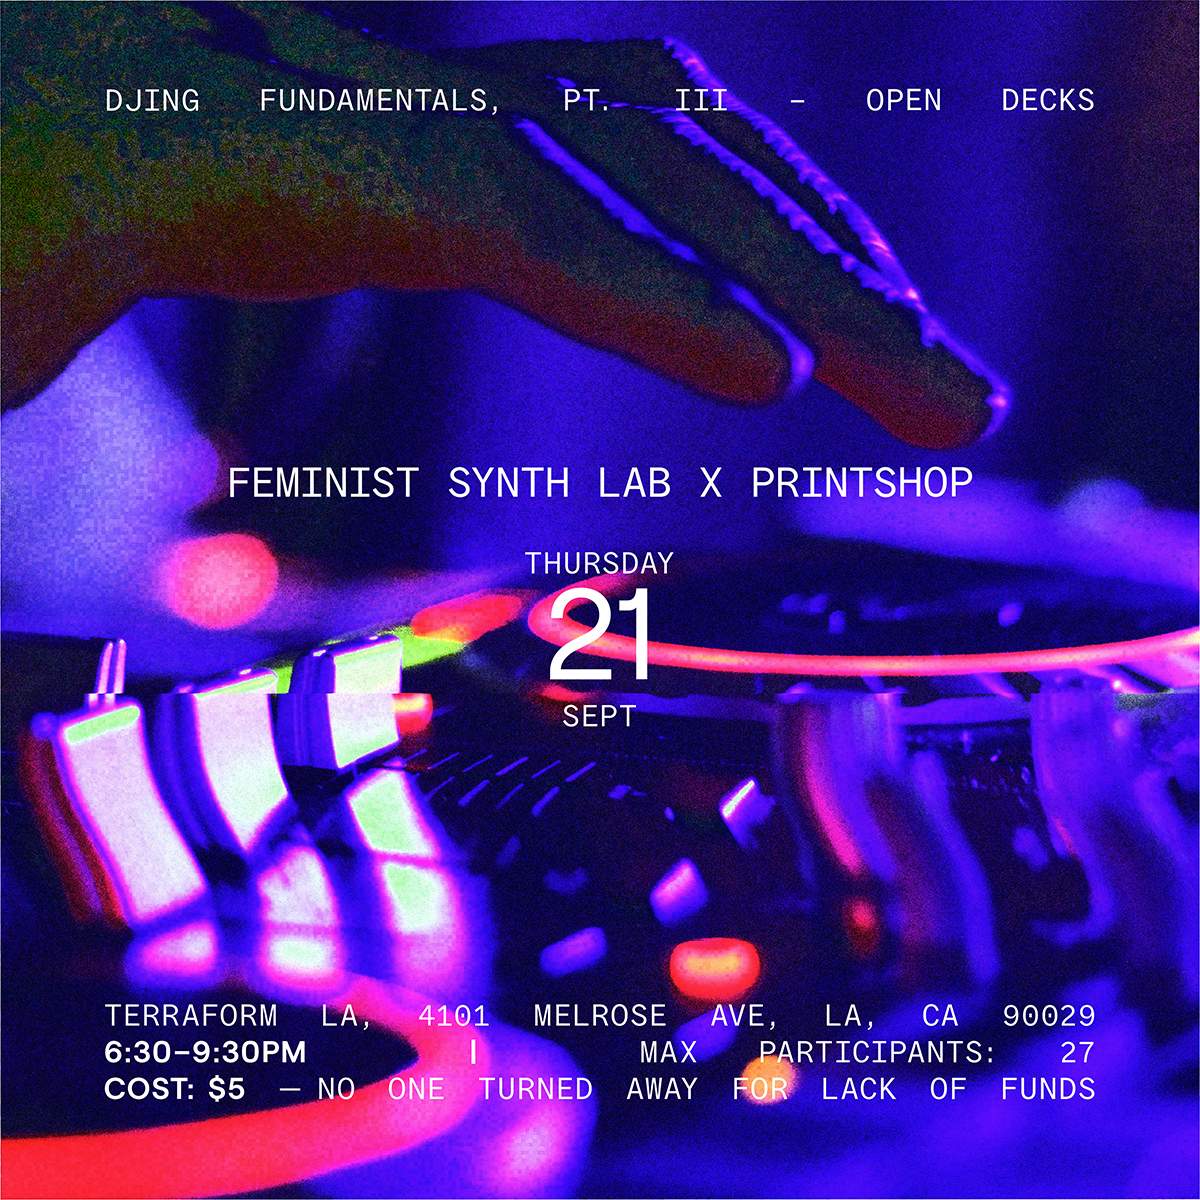 Feminist Synth Lab DJing Part III — Open Decks